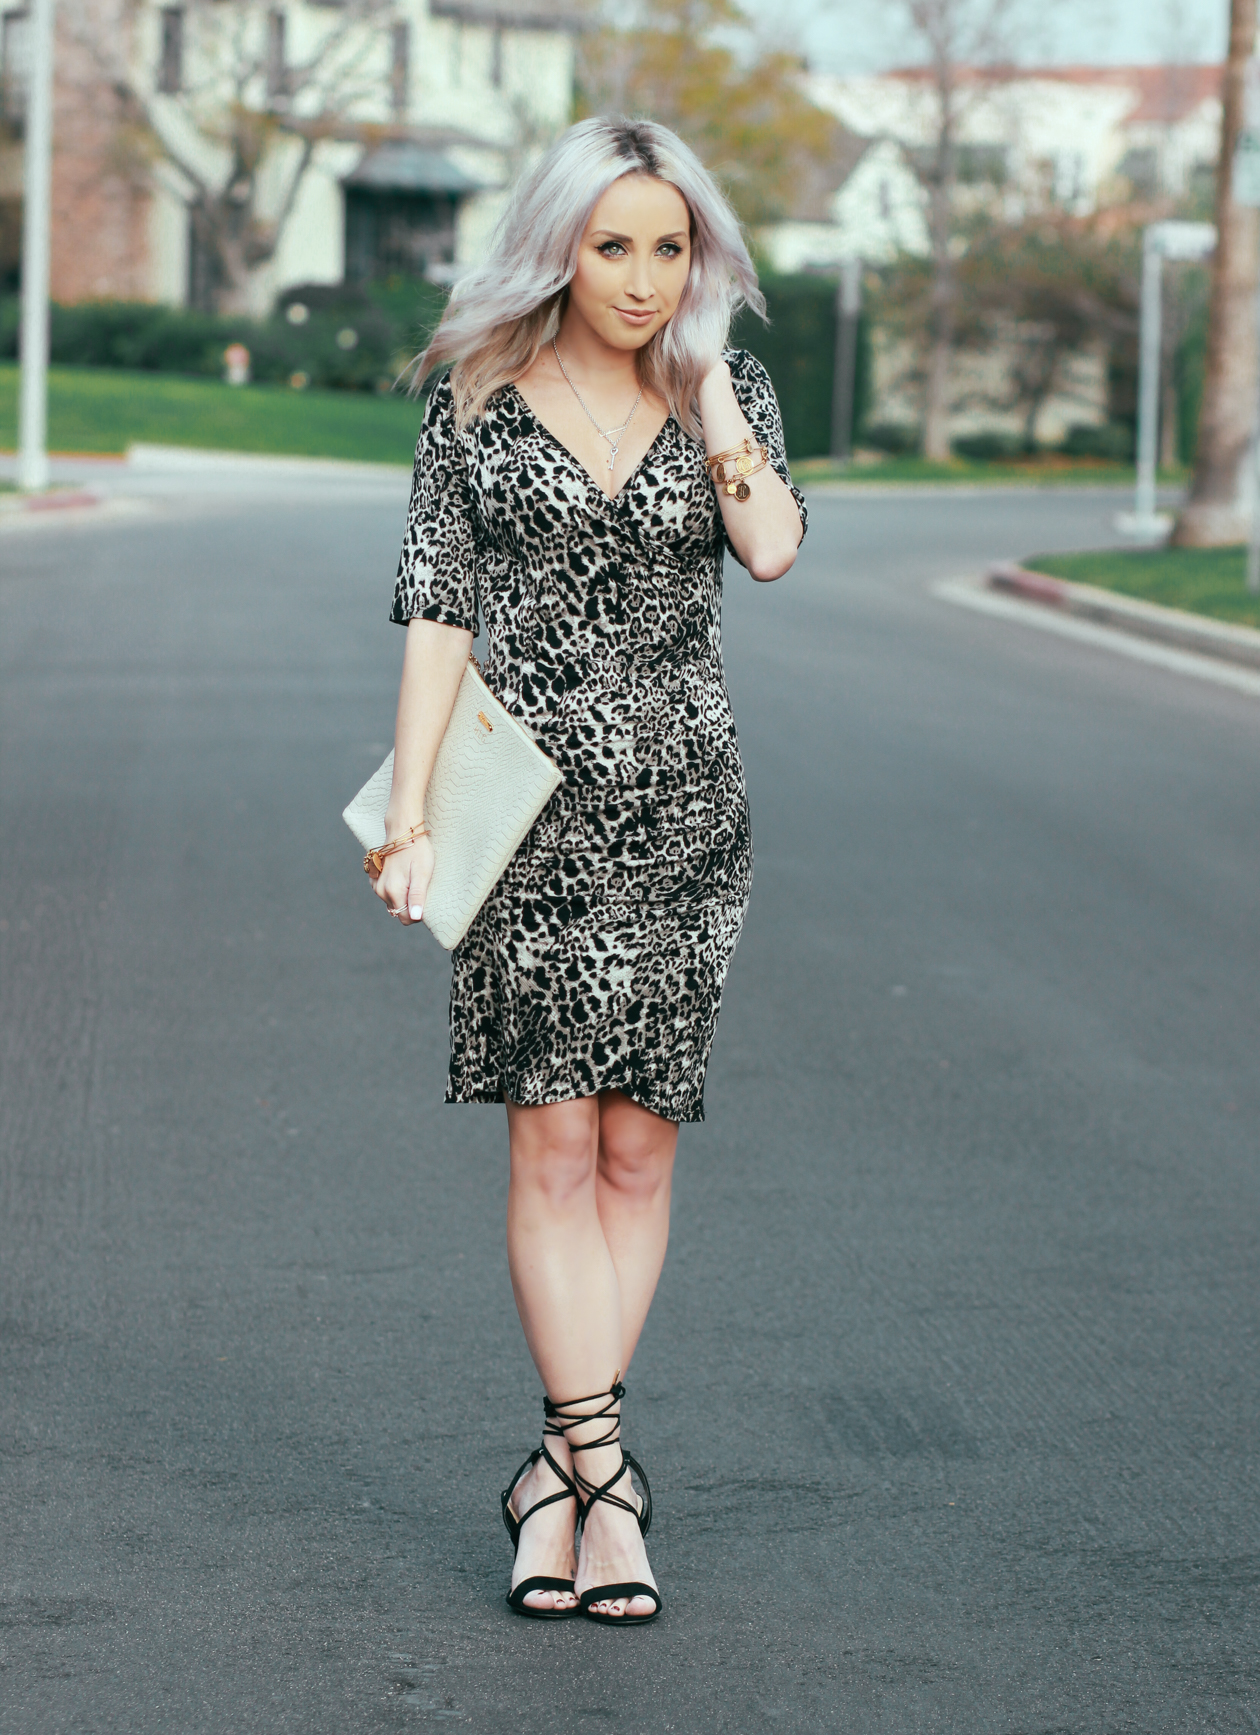 Leopard Wrap Dress | BlondieInTheCity.com